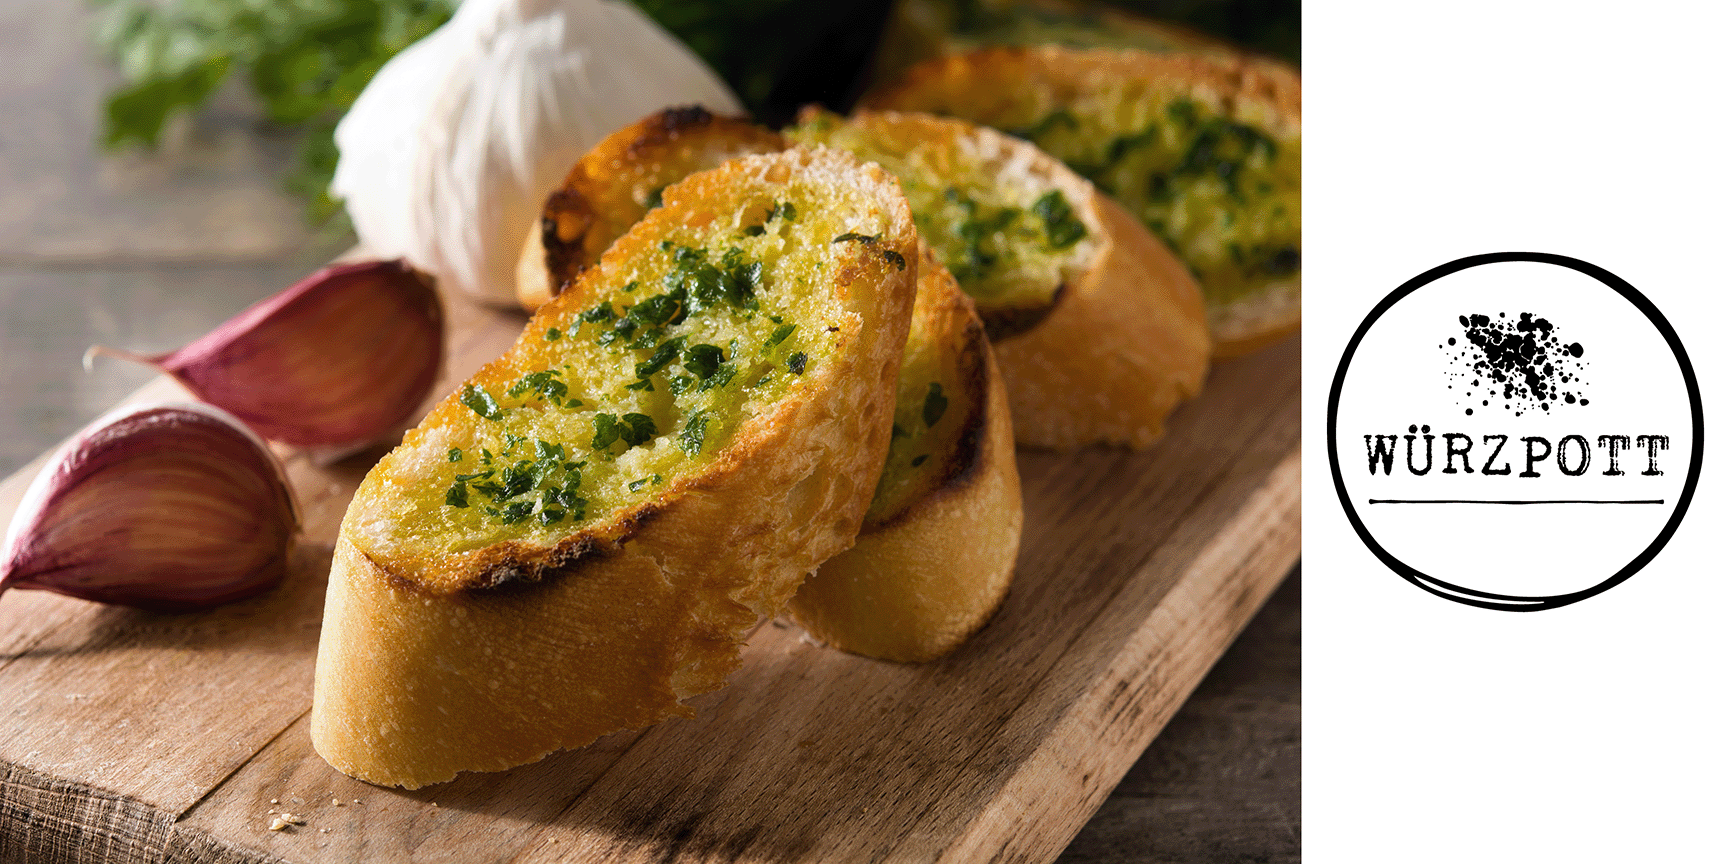 Wurzpott Garlic Bread with Italian Seasoning